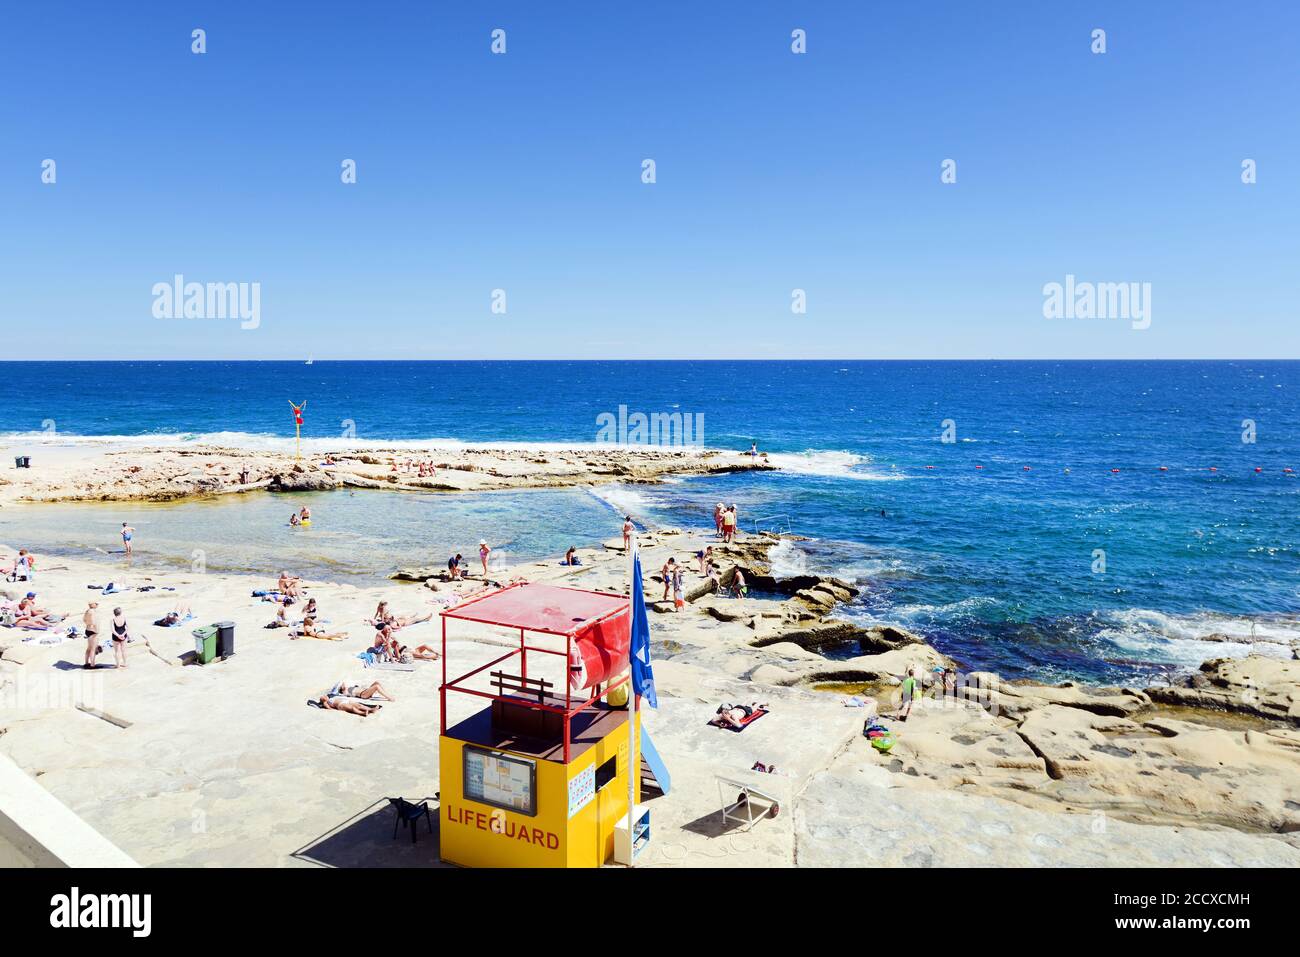 The beautiful rocky beach in Sliema, Malta. Stock Photo